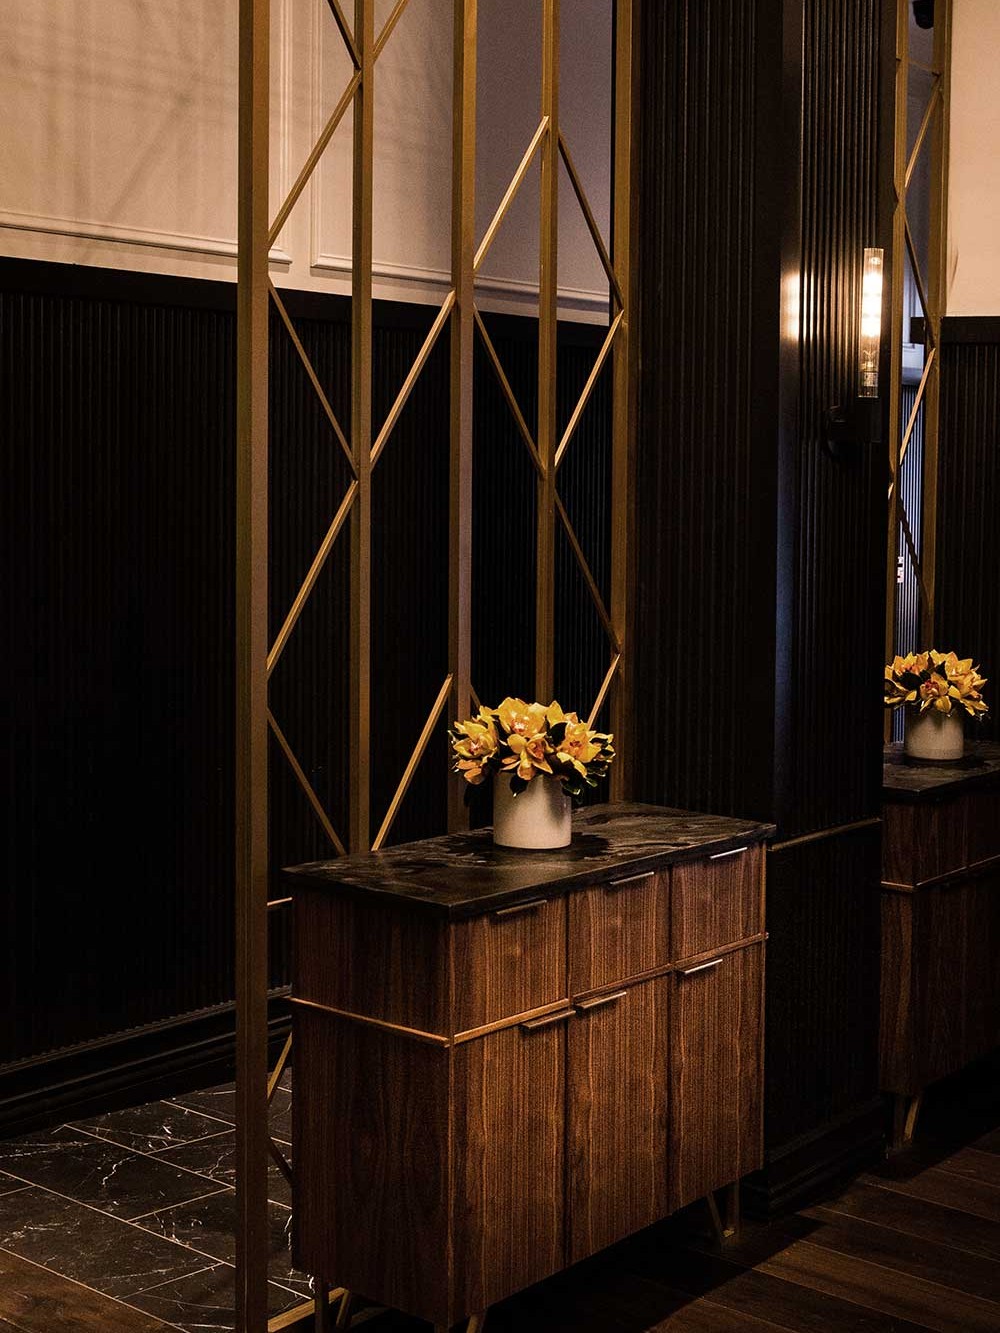 Keany Interiors: Hospitality Design Project for Kixby Hotel